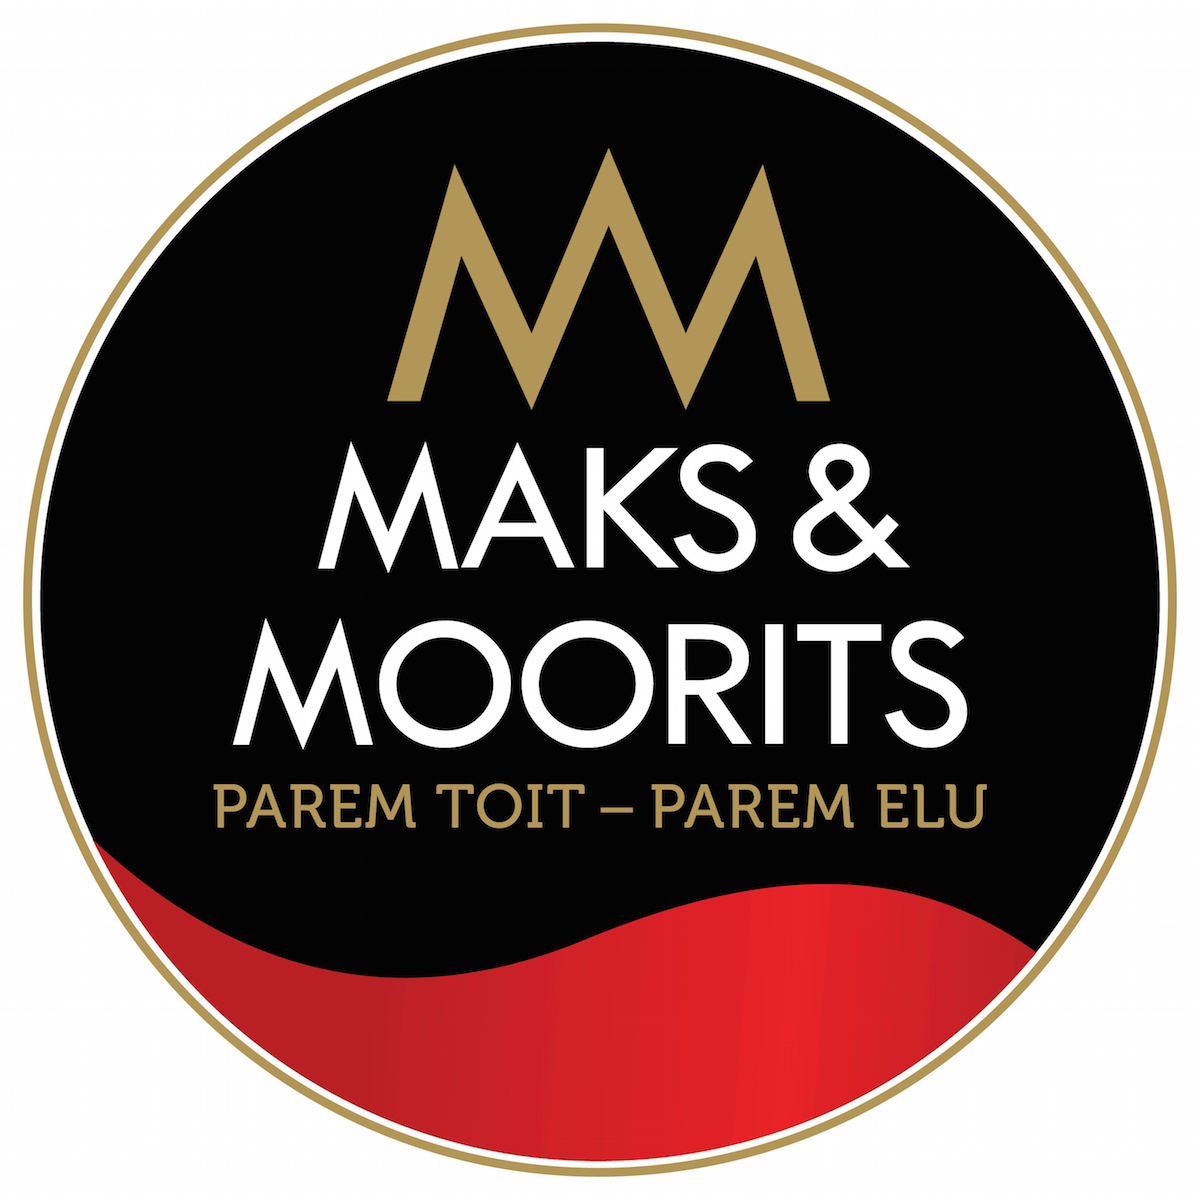 maks-ja-moorits_logo.jpg